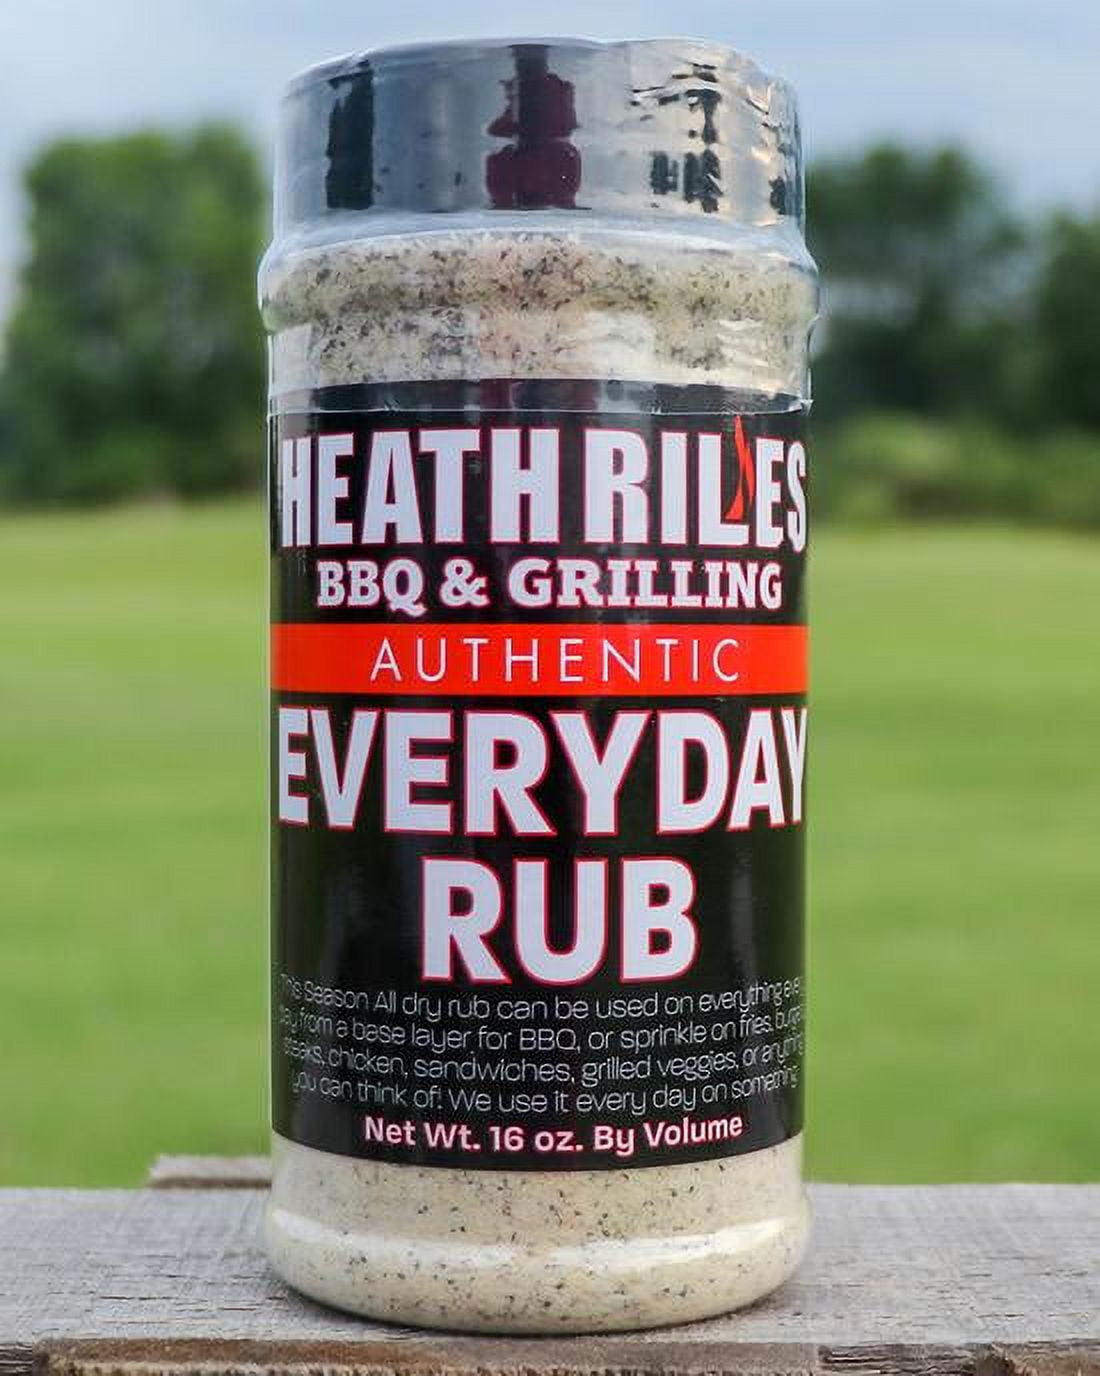 Heath Riles BBQ Honey Rub, 16oz – The Burn Shop